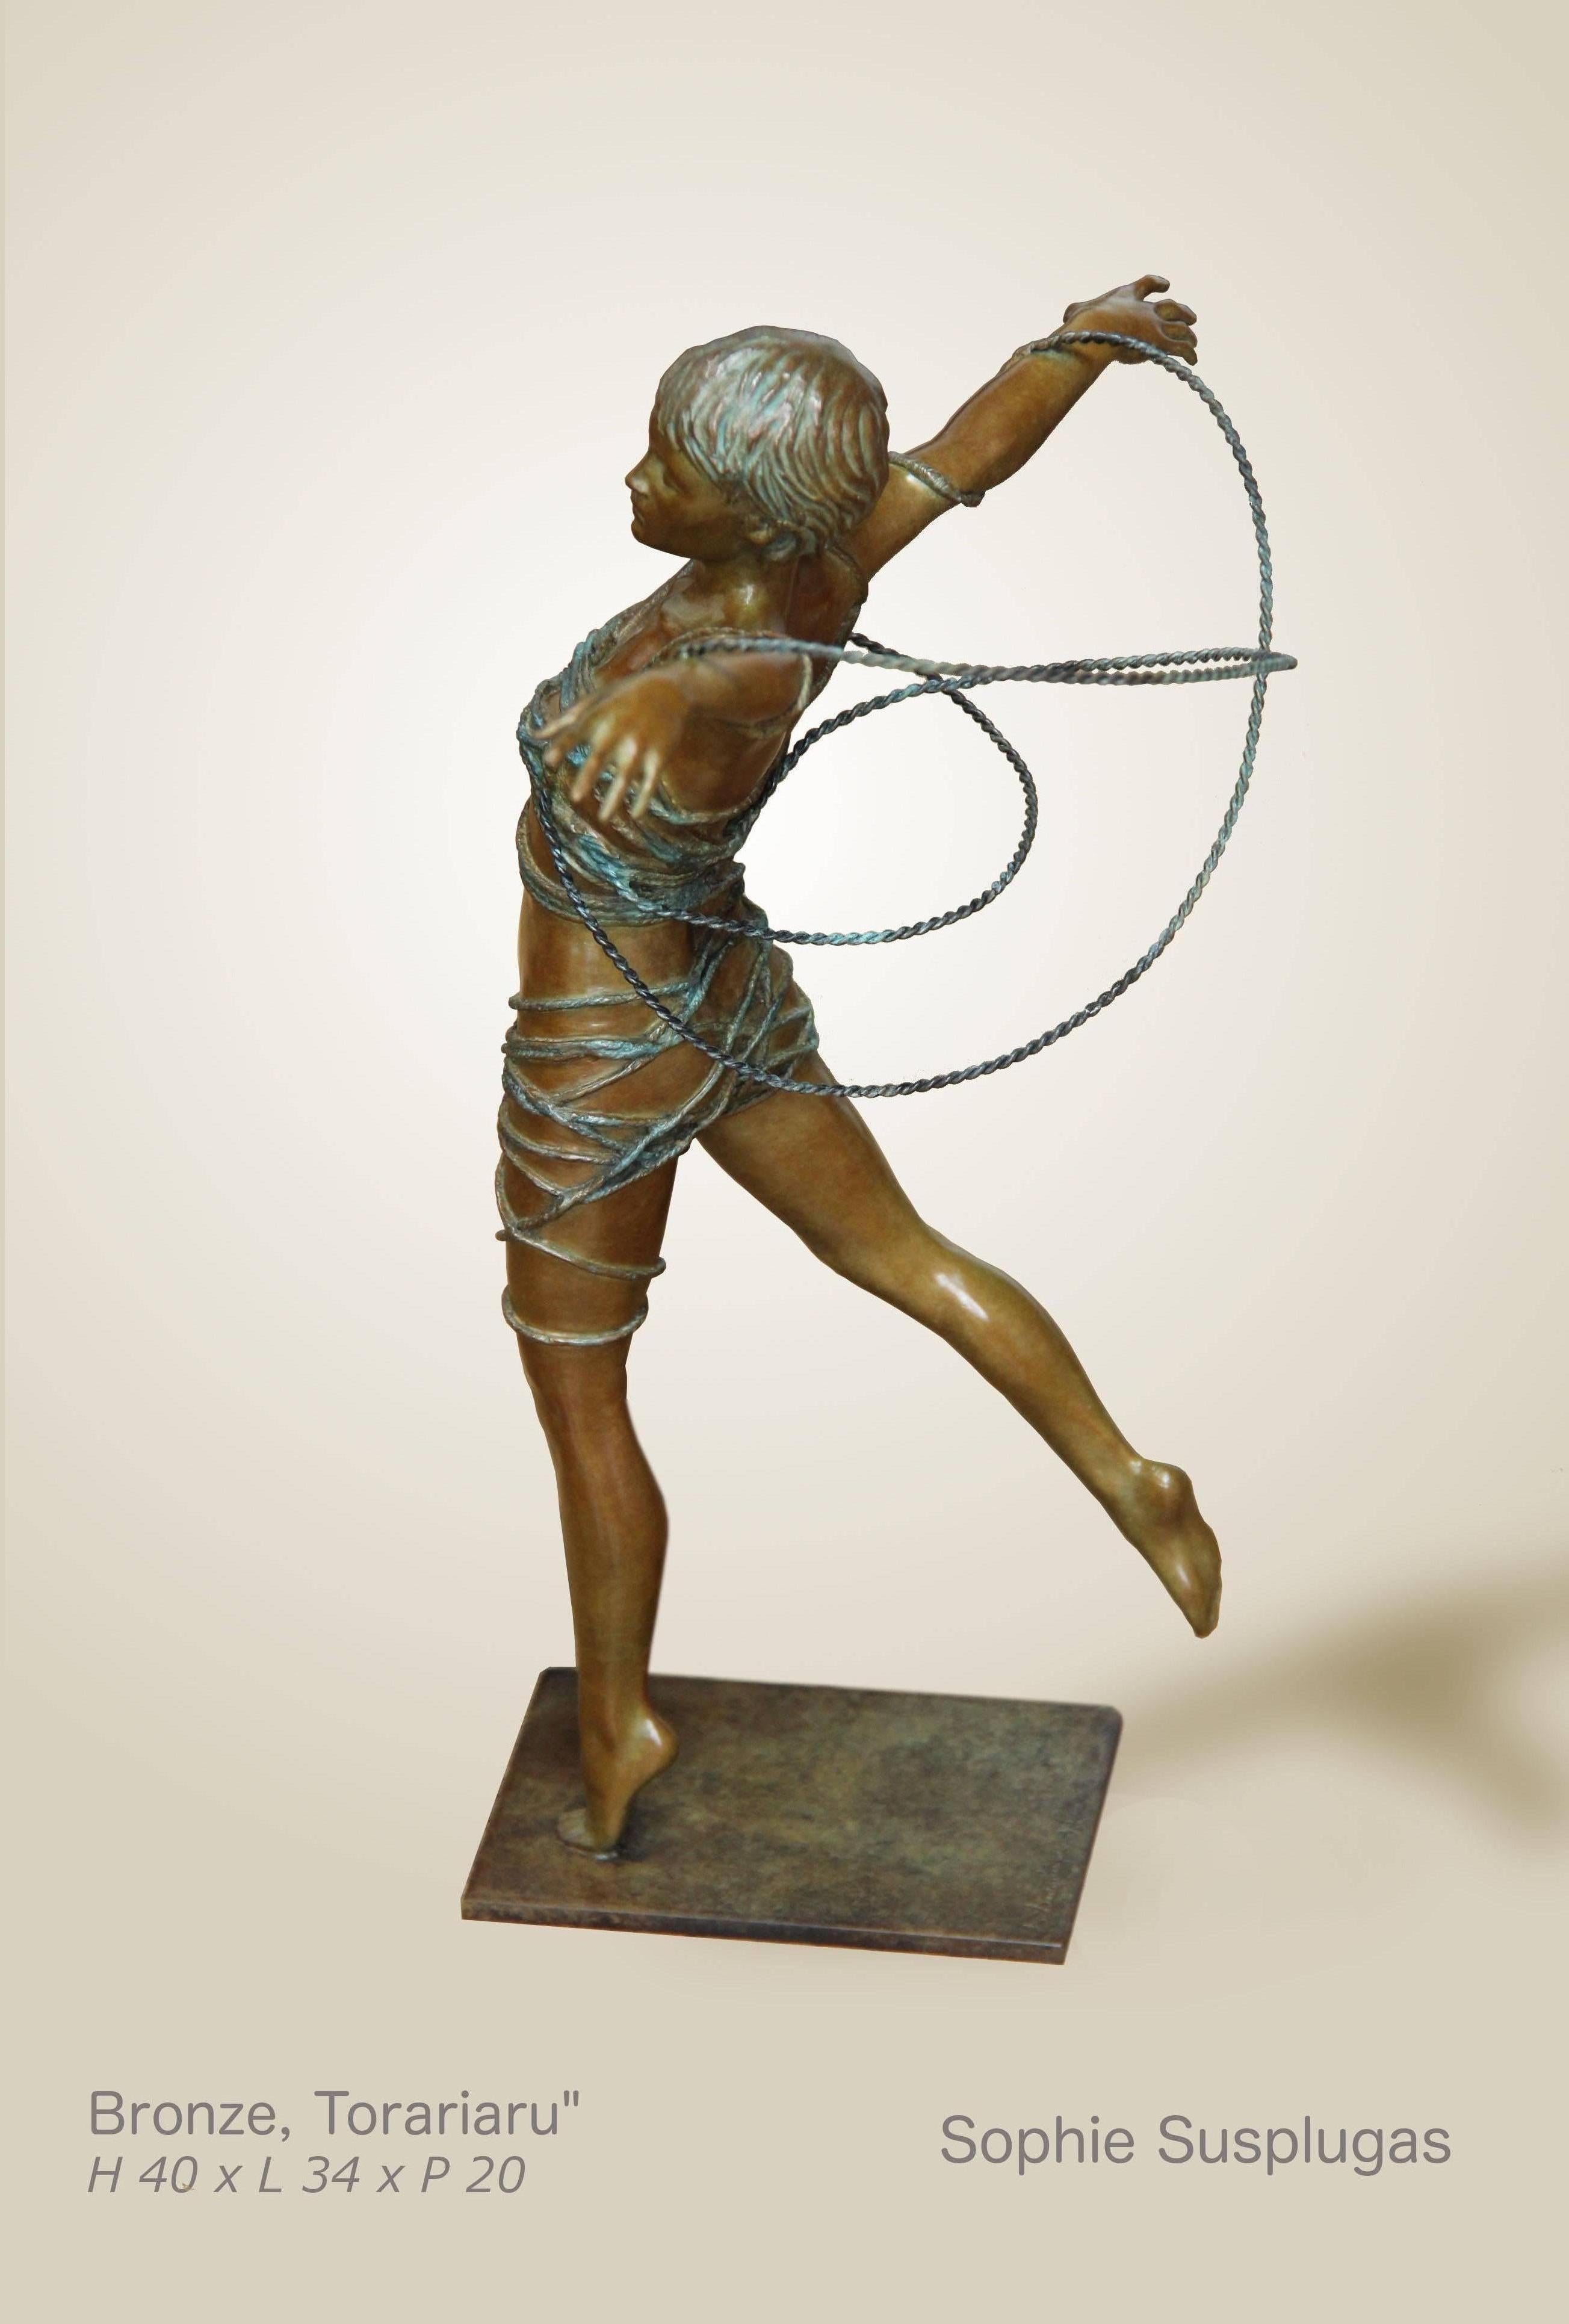 Torariaru bronze 1/8 - Sculpture by Sophie Susplugas